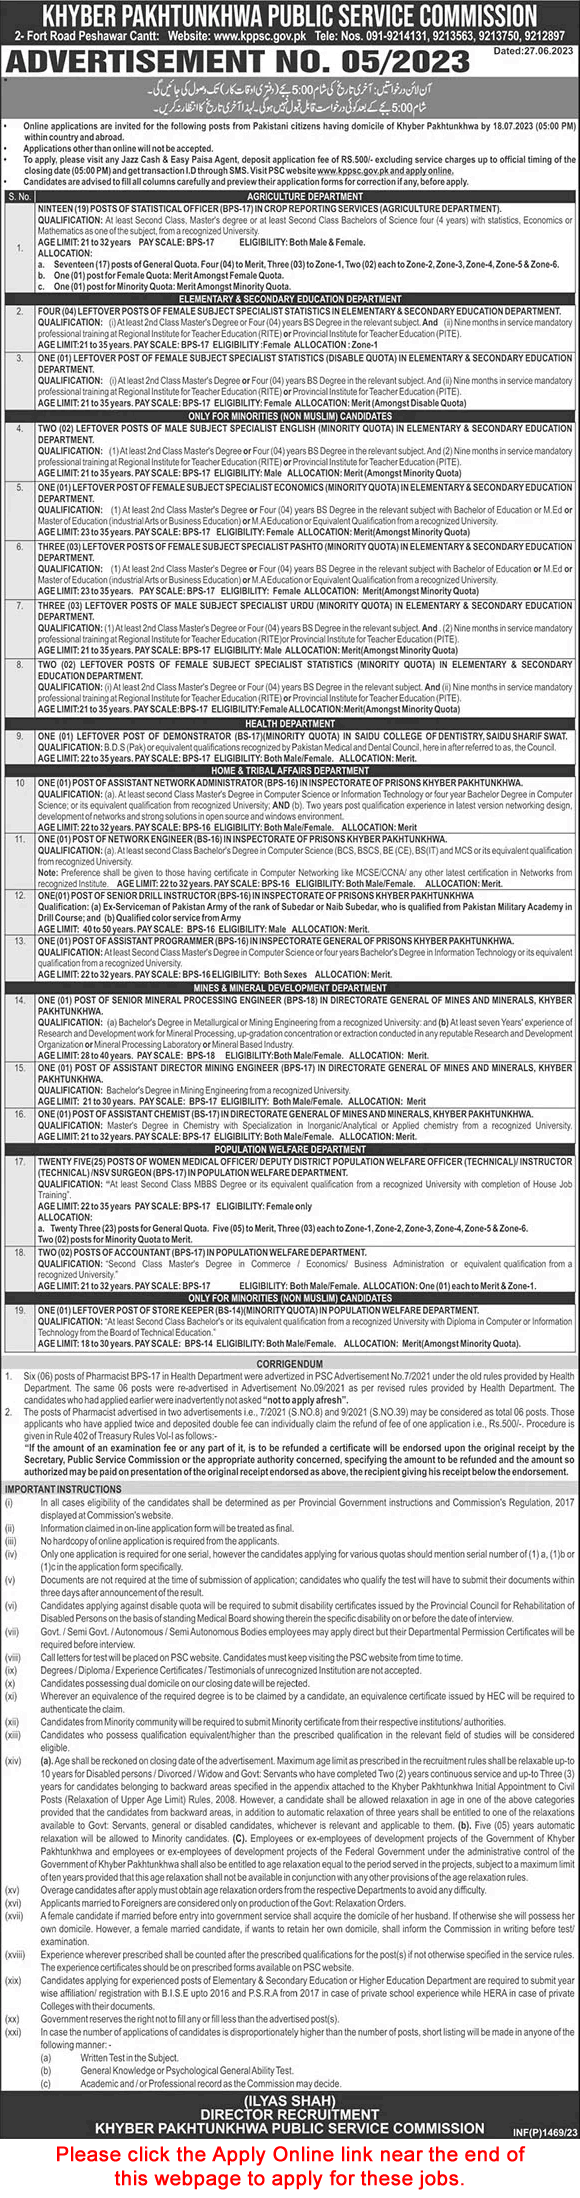 KPK Public Service Commission Jobs June 2023 July KPPSC Apply Online Advertisement No 05/2023 Latest